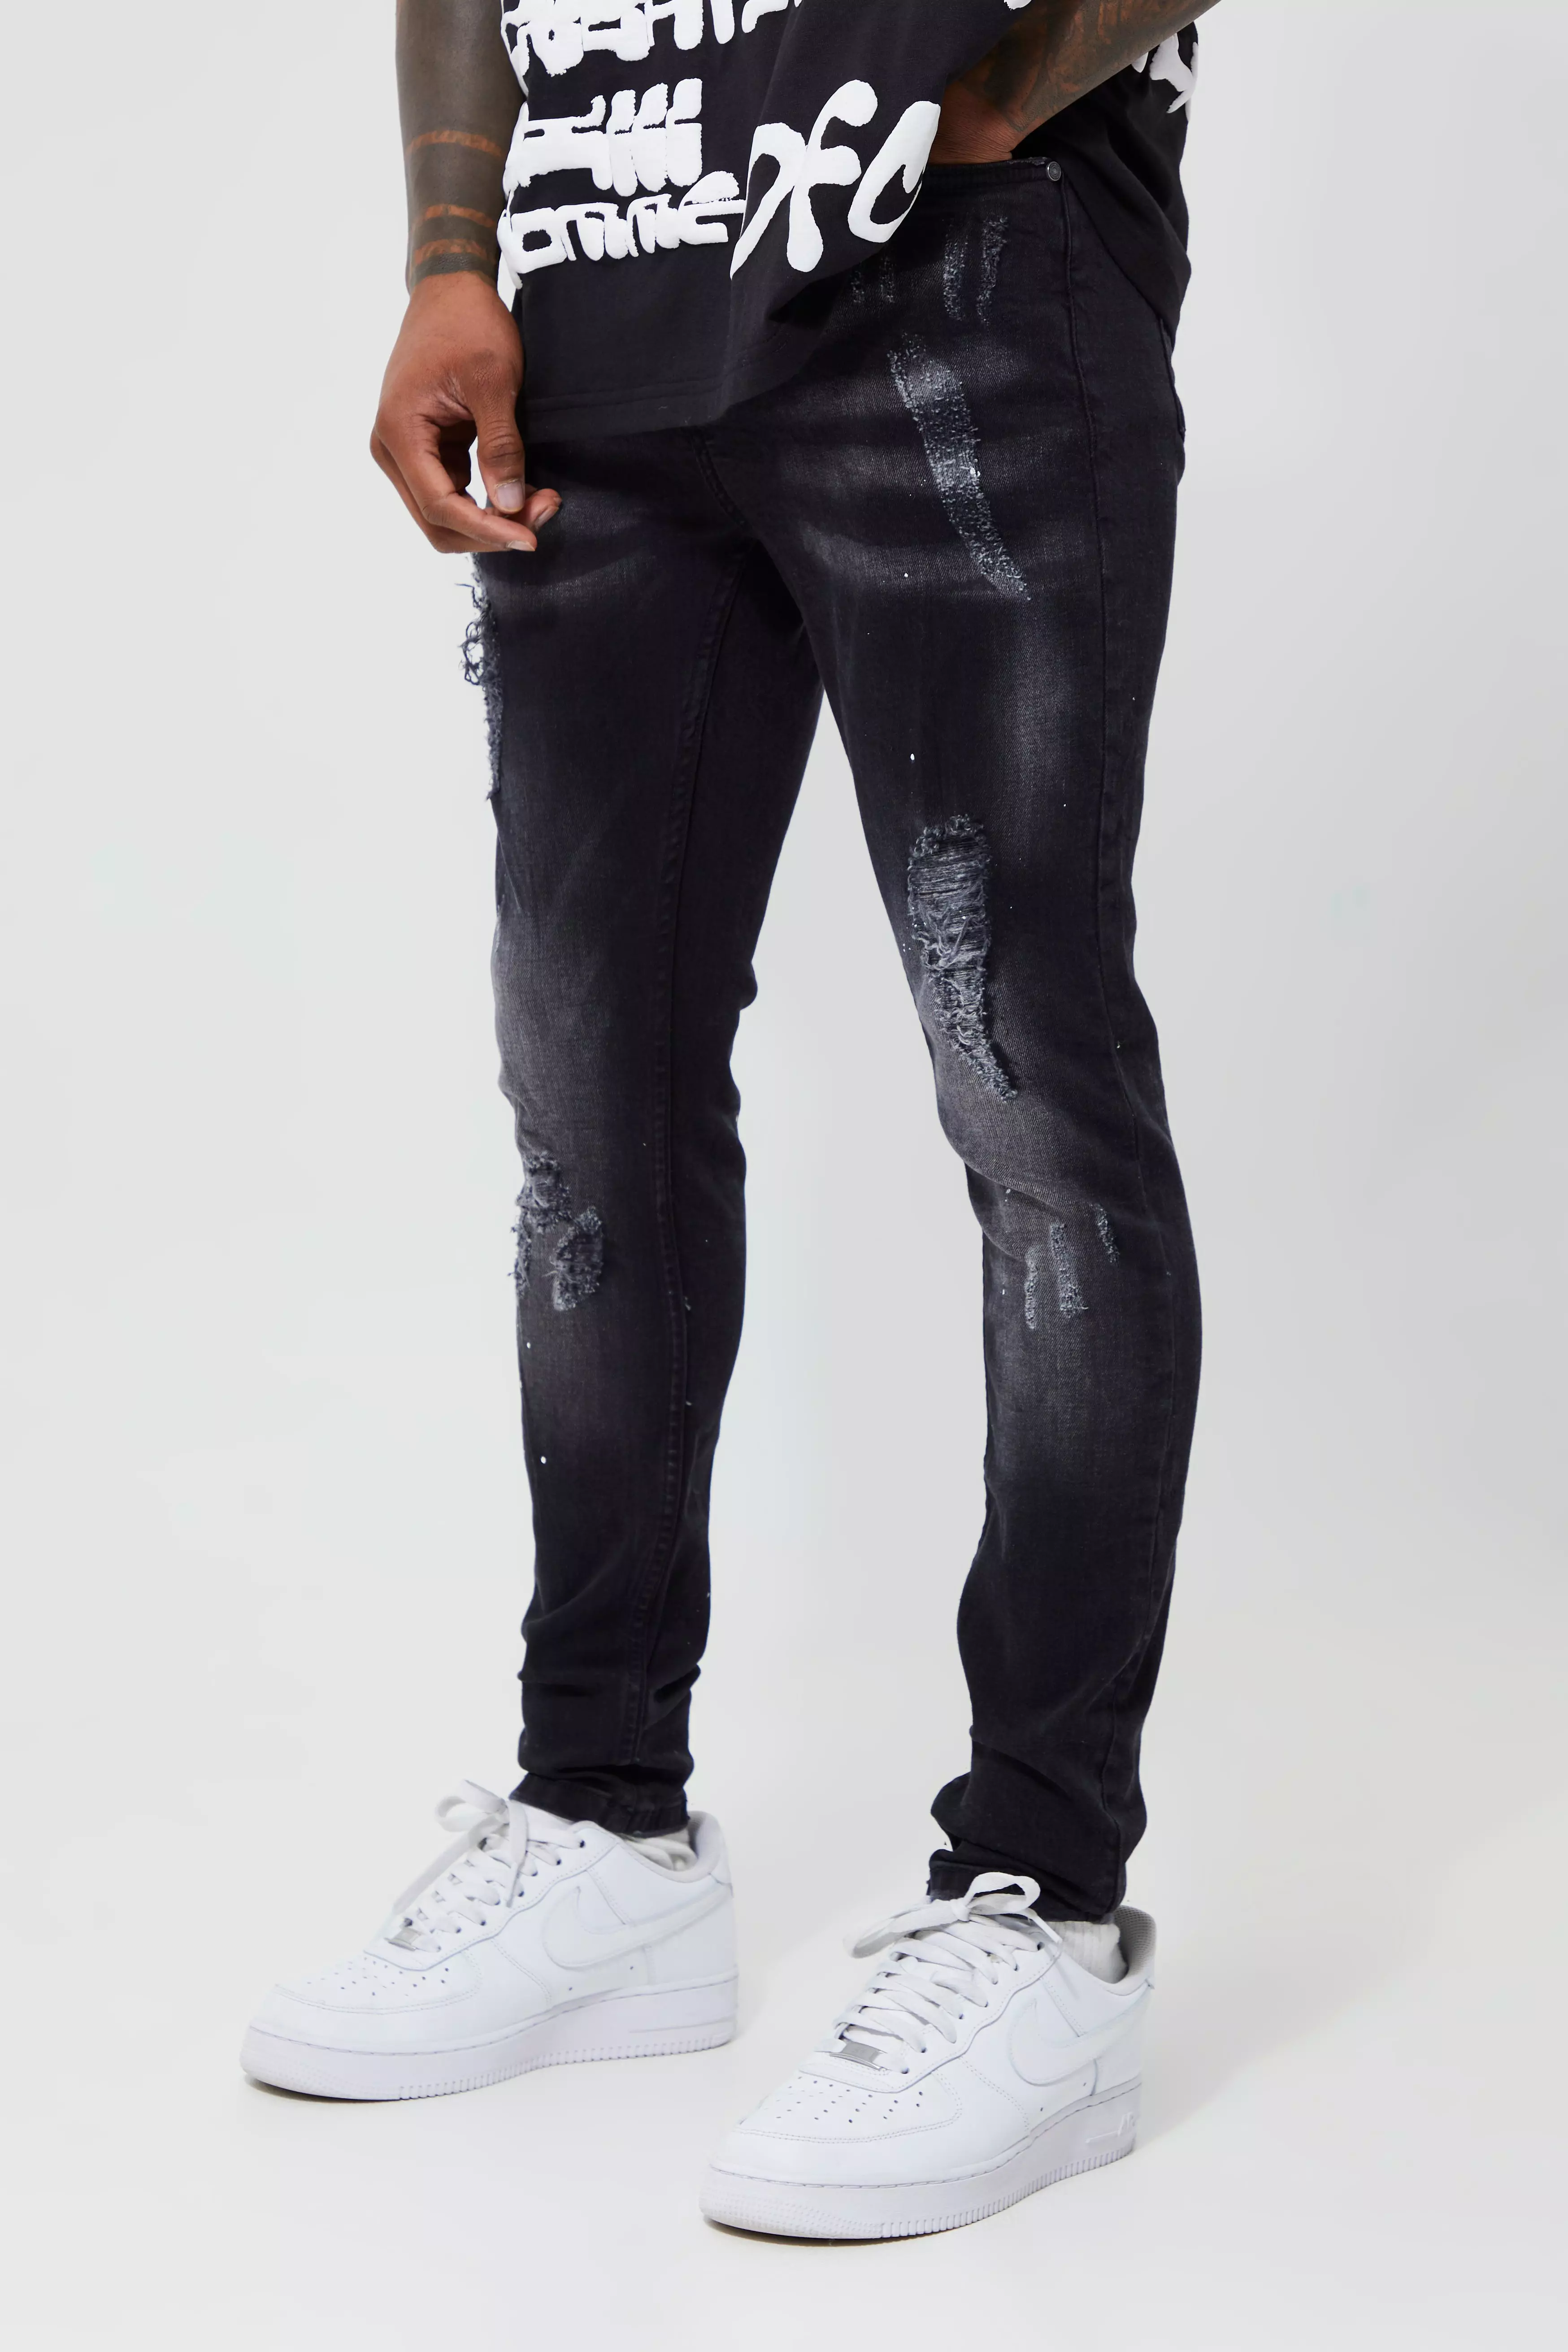 Ash Grey Super Skinny Distressed Paint Splat Jeans